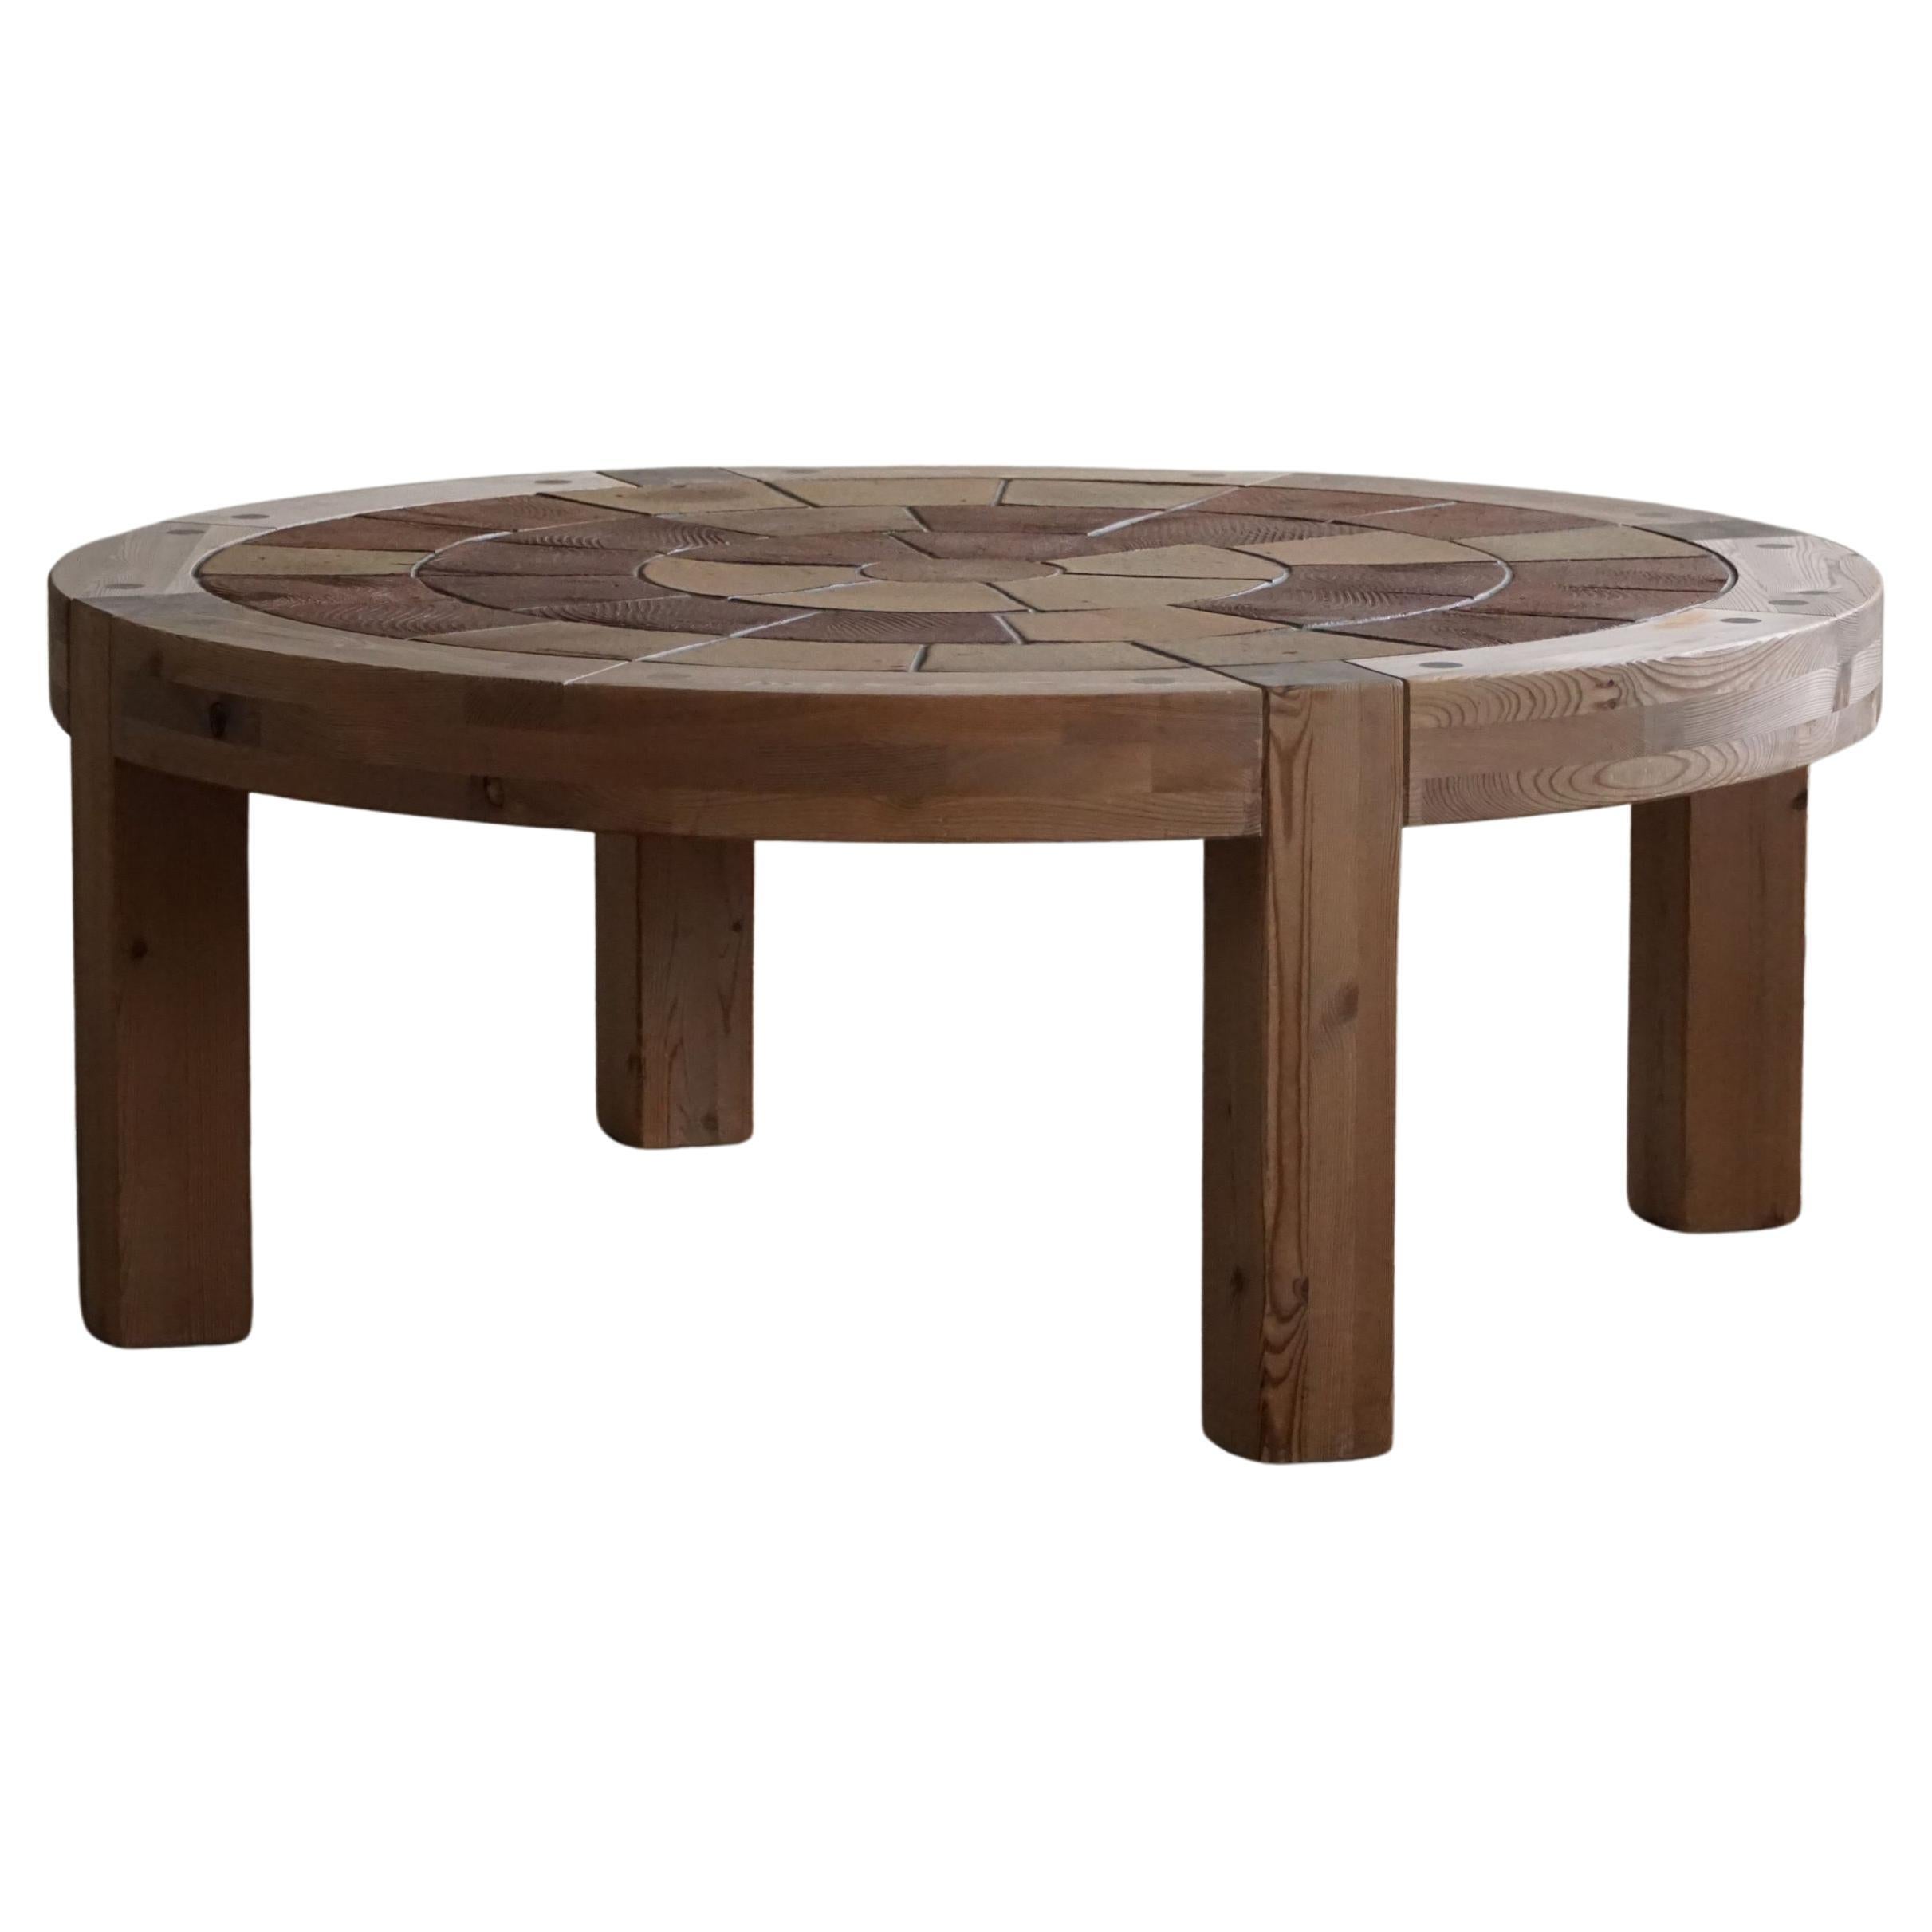 Sallingboe, Large Round Coffee Table in Pine & Ceramic, Danish Design, 1970s